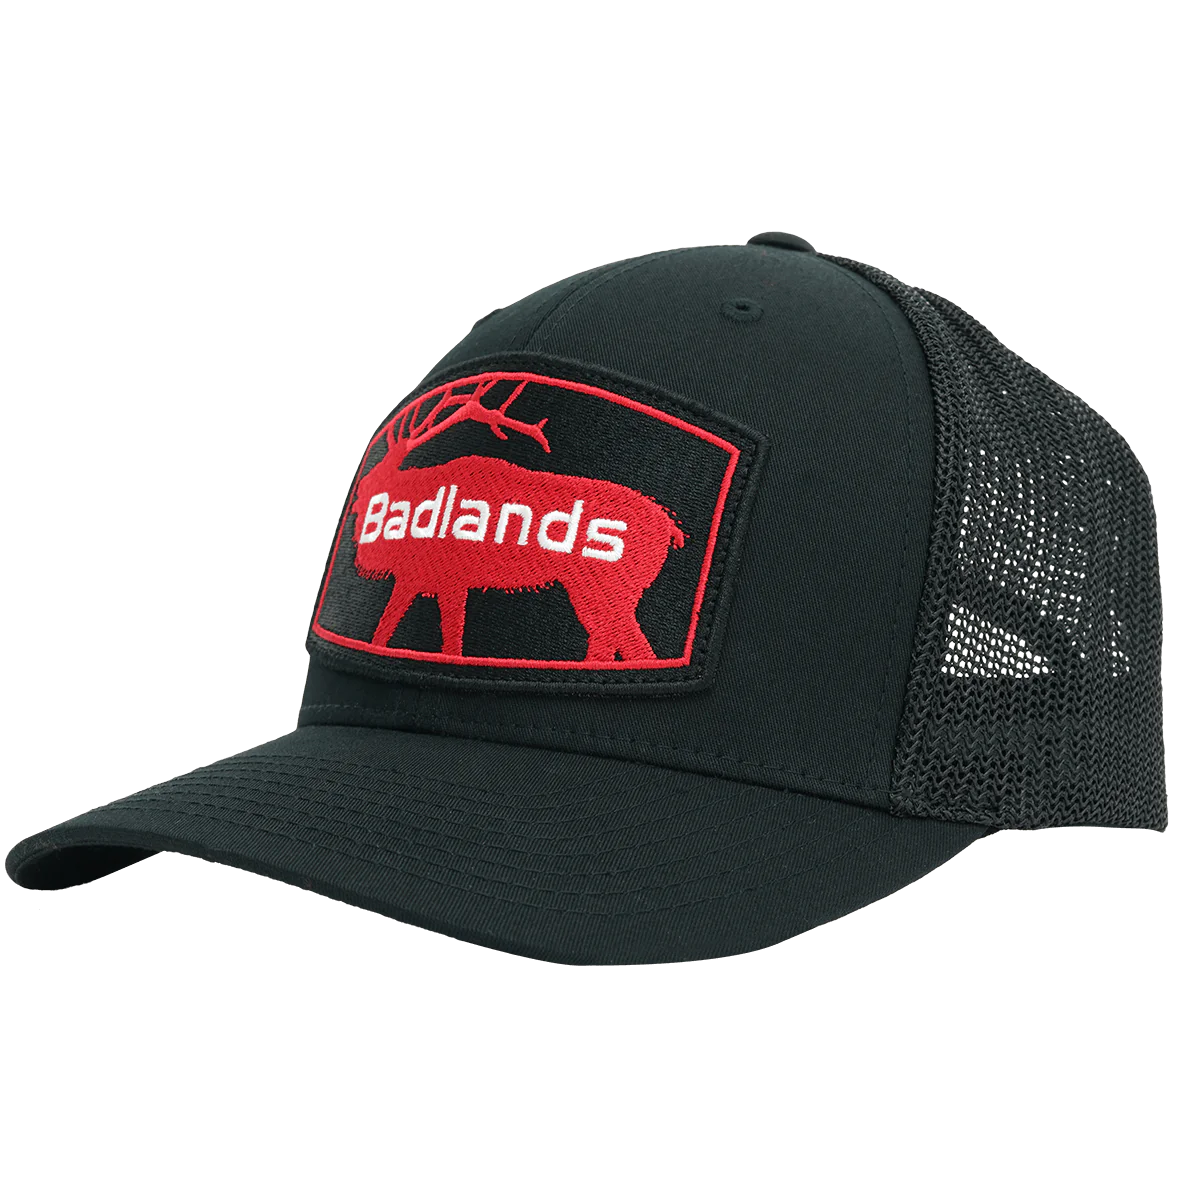 Badlands Red Bull Snapback Hat